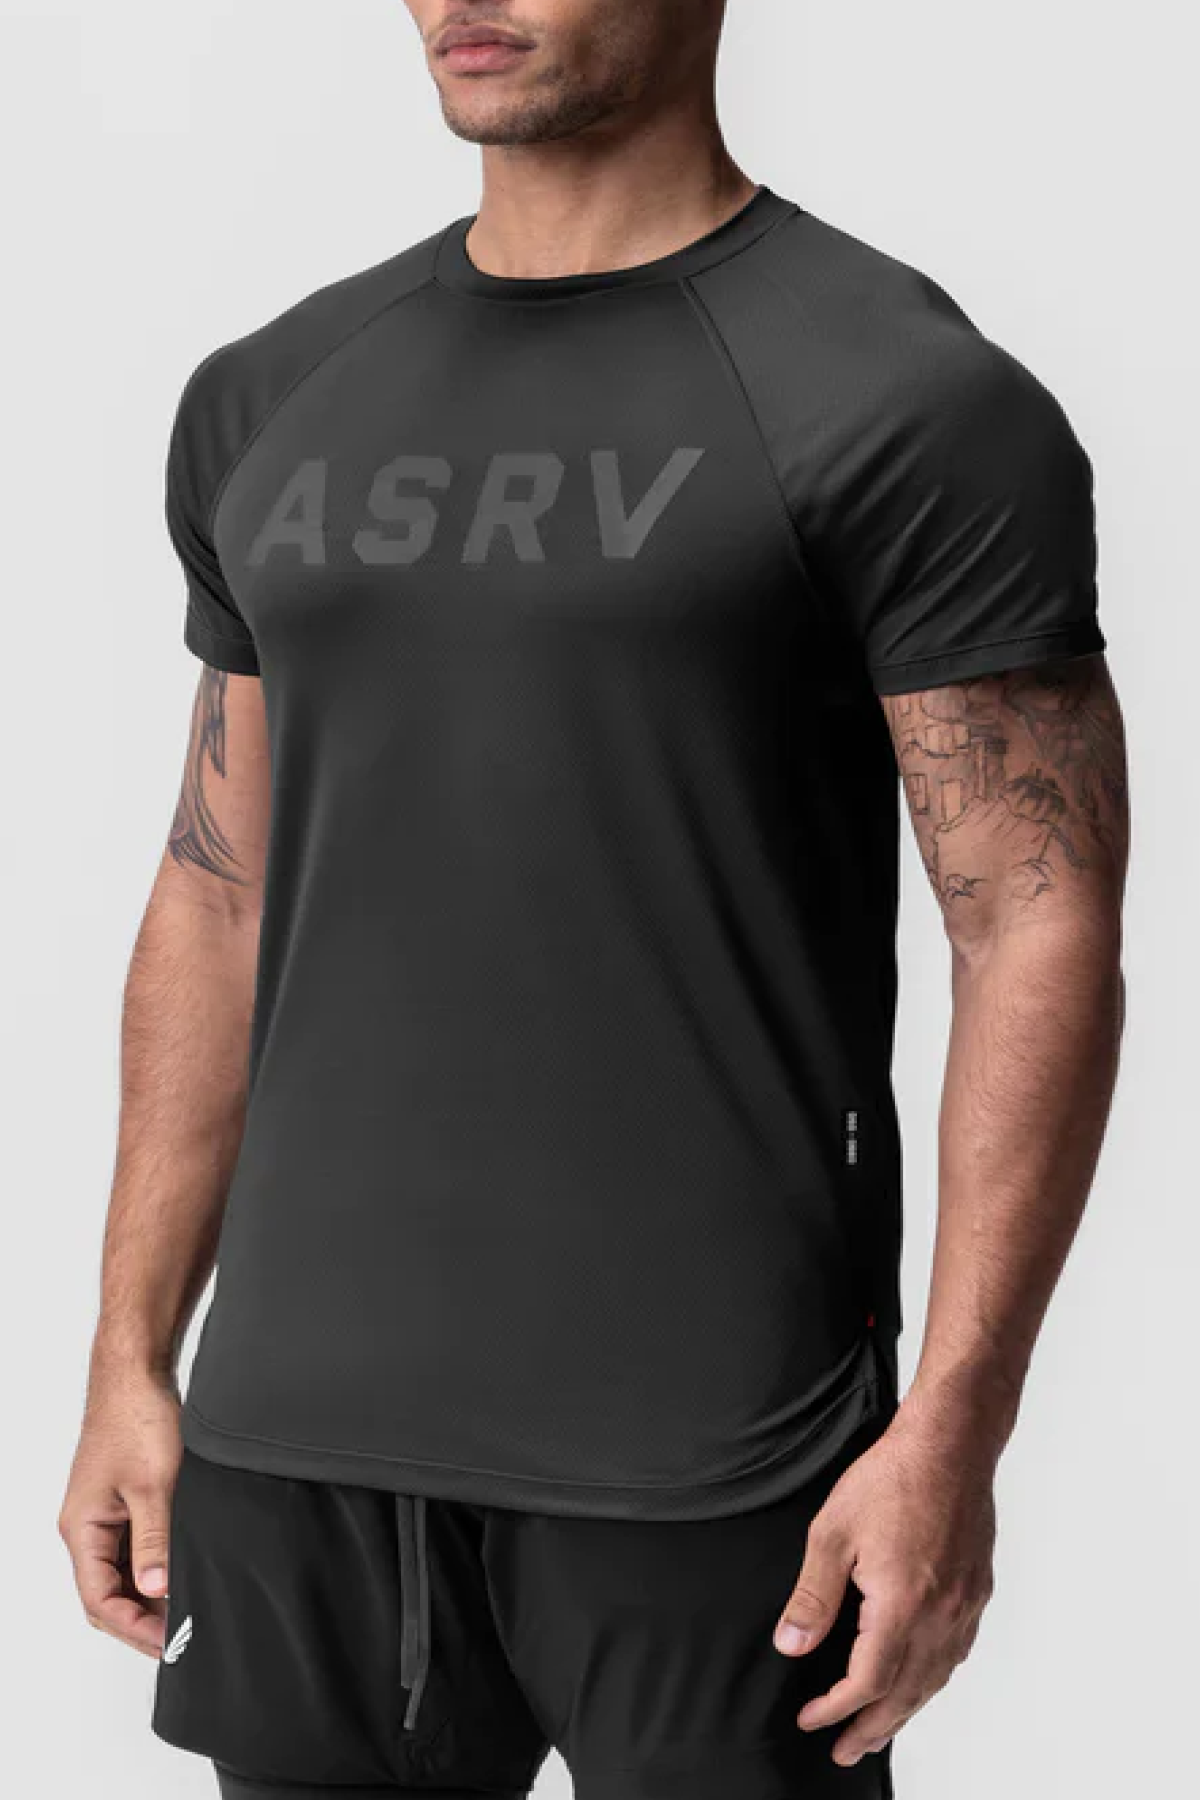 ASRV Aerosilver® Established Tee - Black &quot;ASRV&quot;